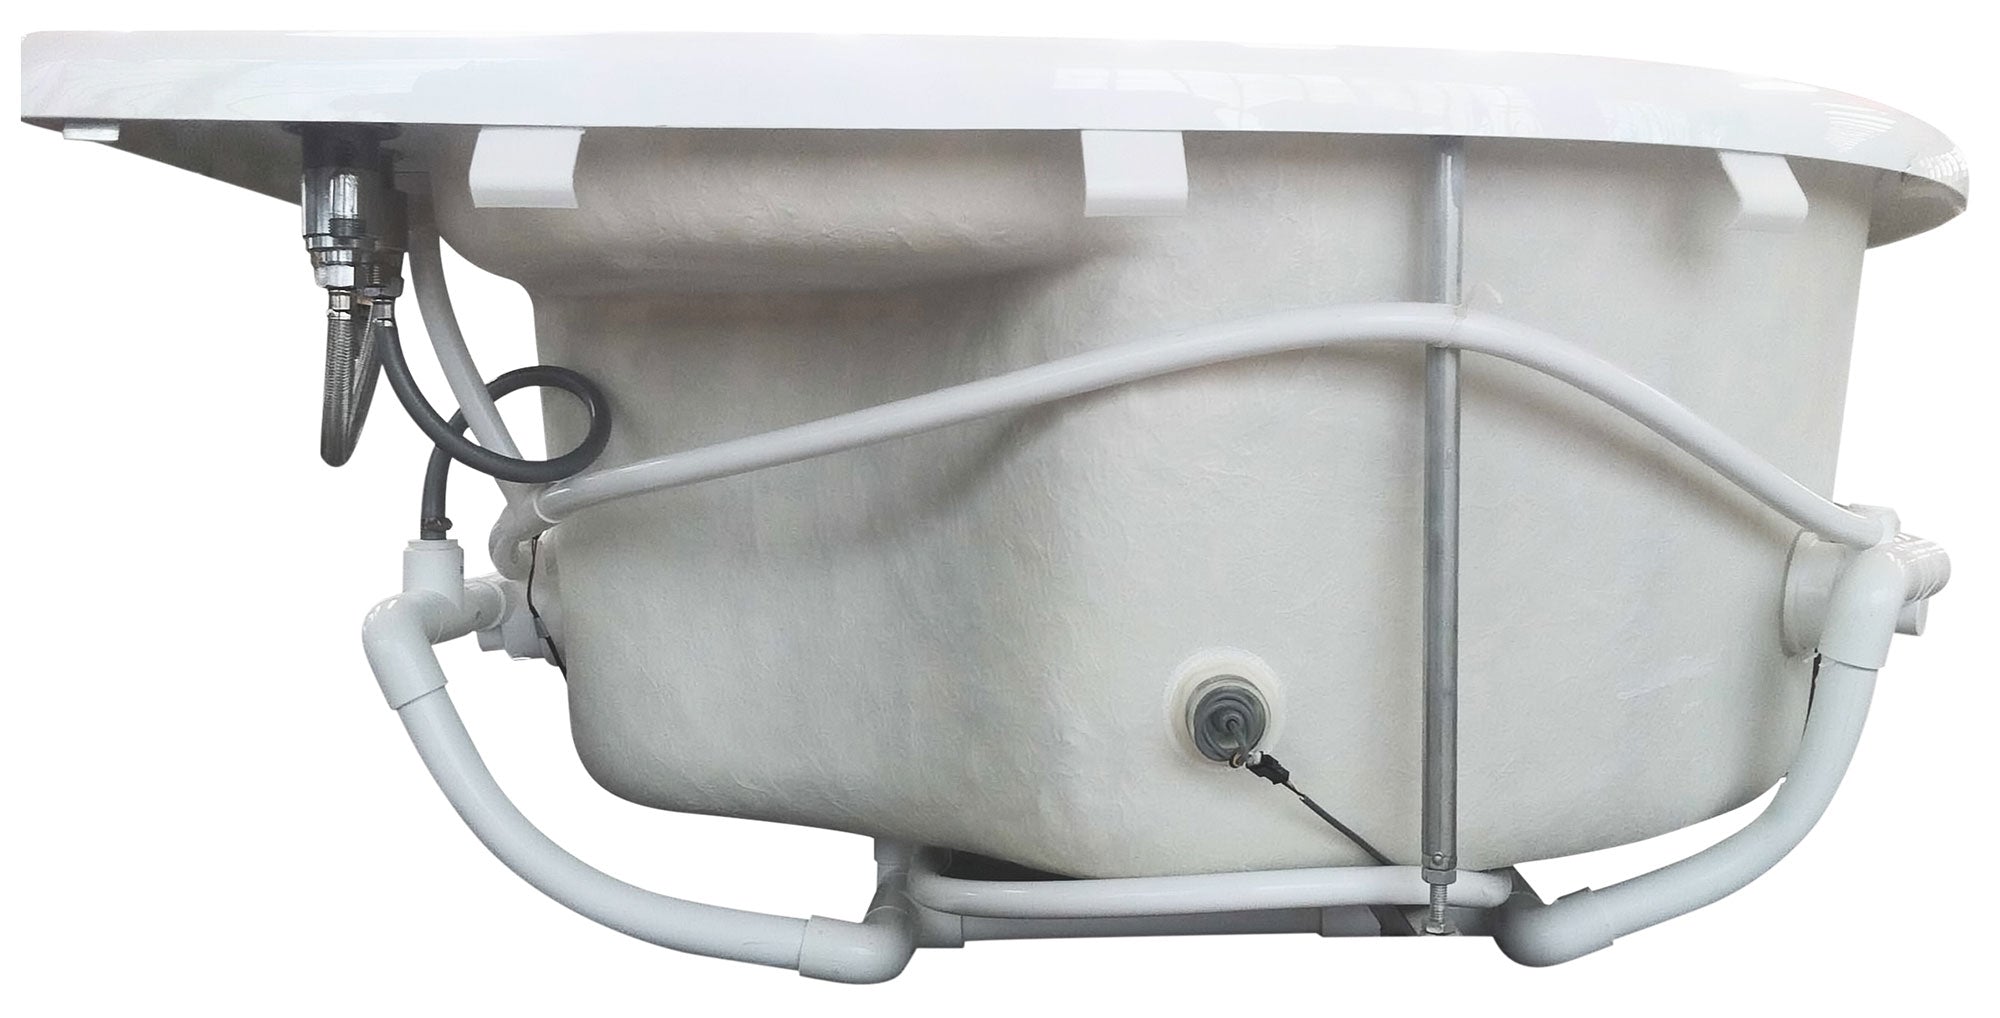 Eago AM124ETL-L 6' Left Corner Acrylic White Whirlpool Bathtub for Two